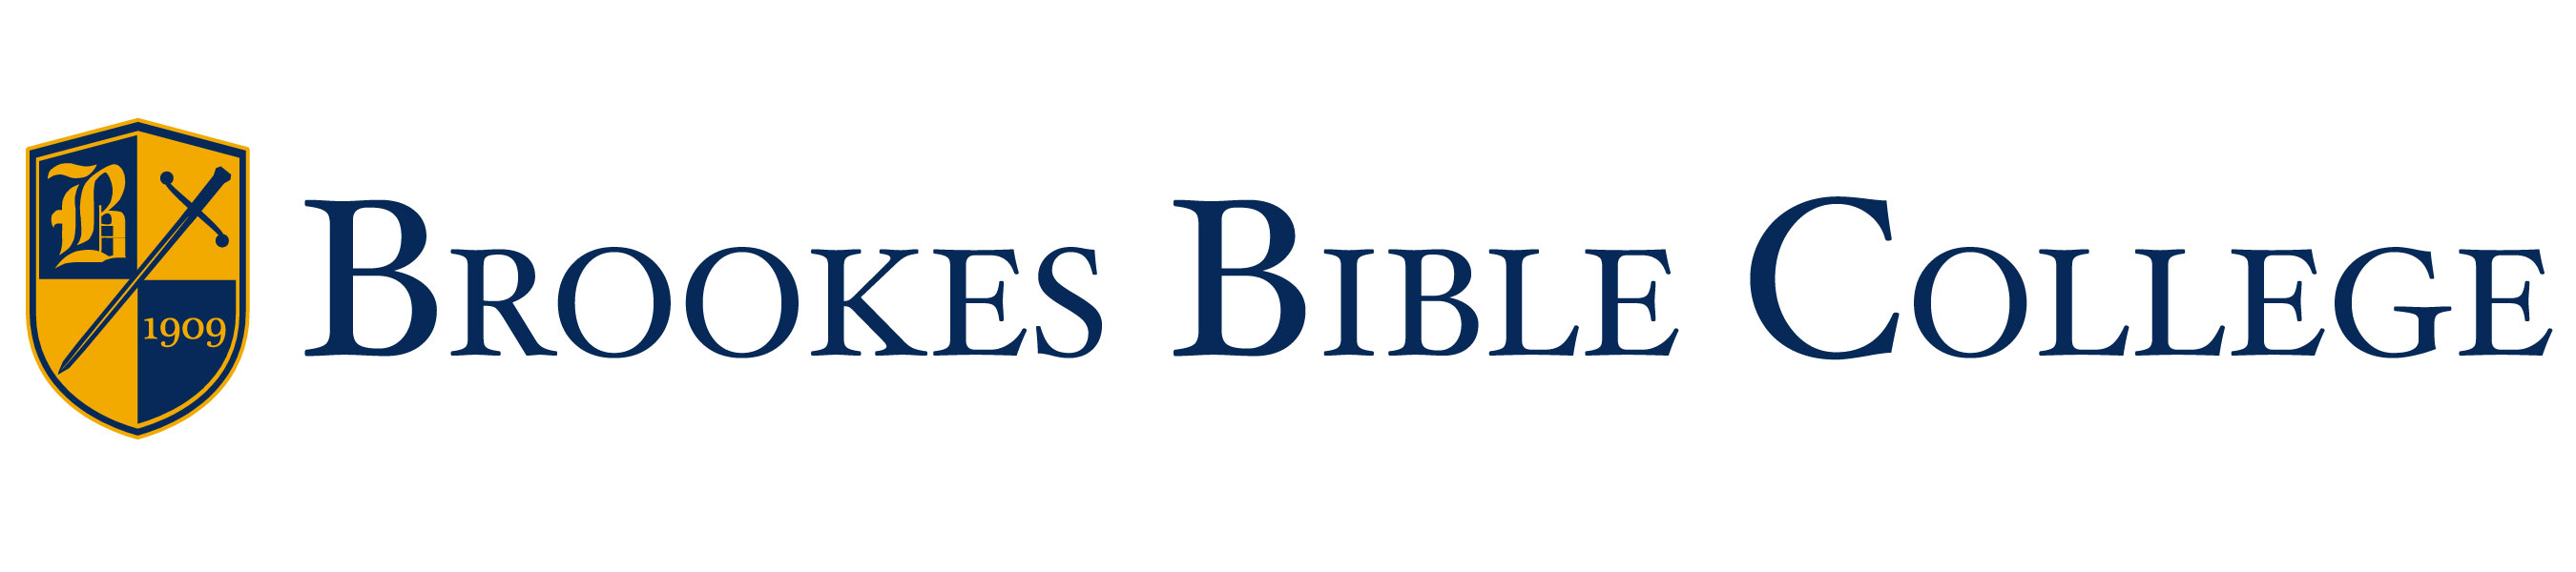 Brookes Bible College logo